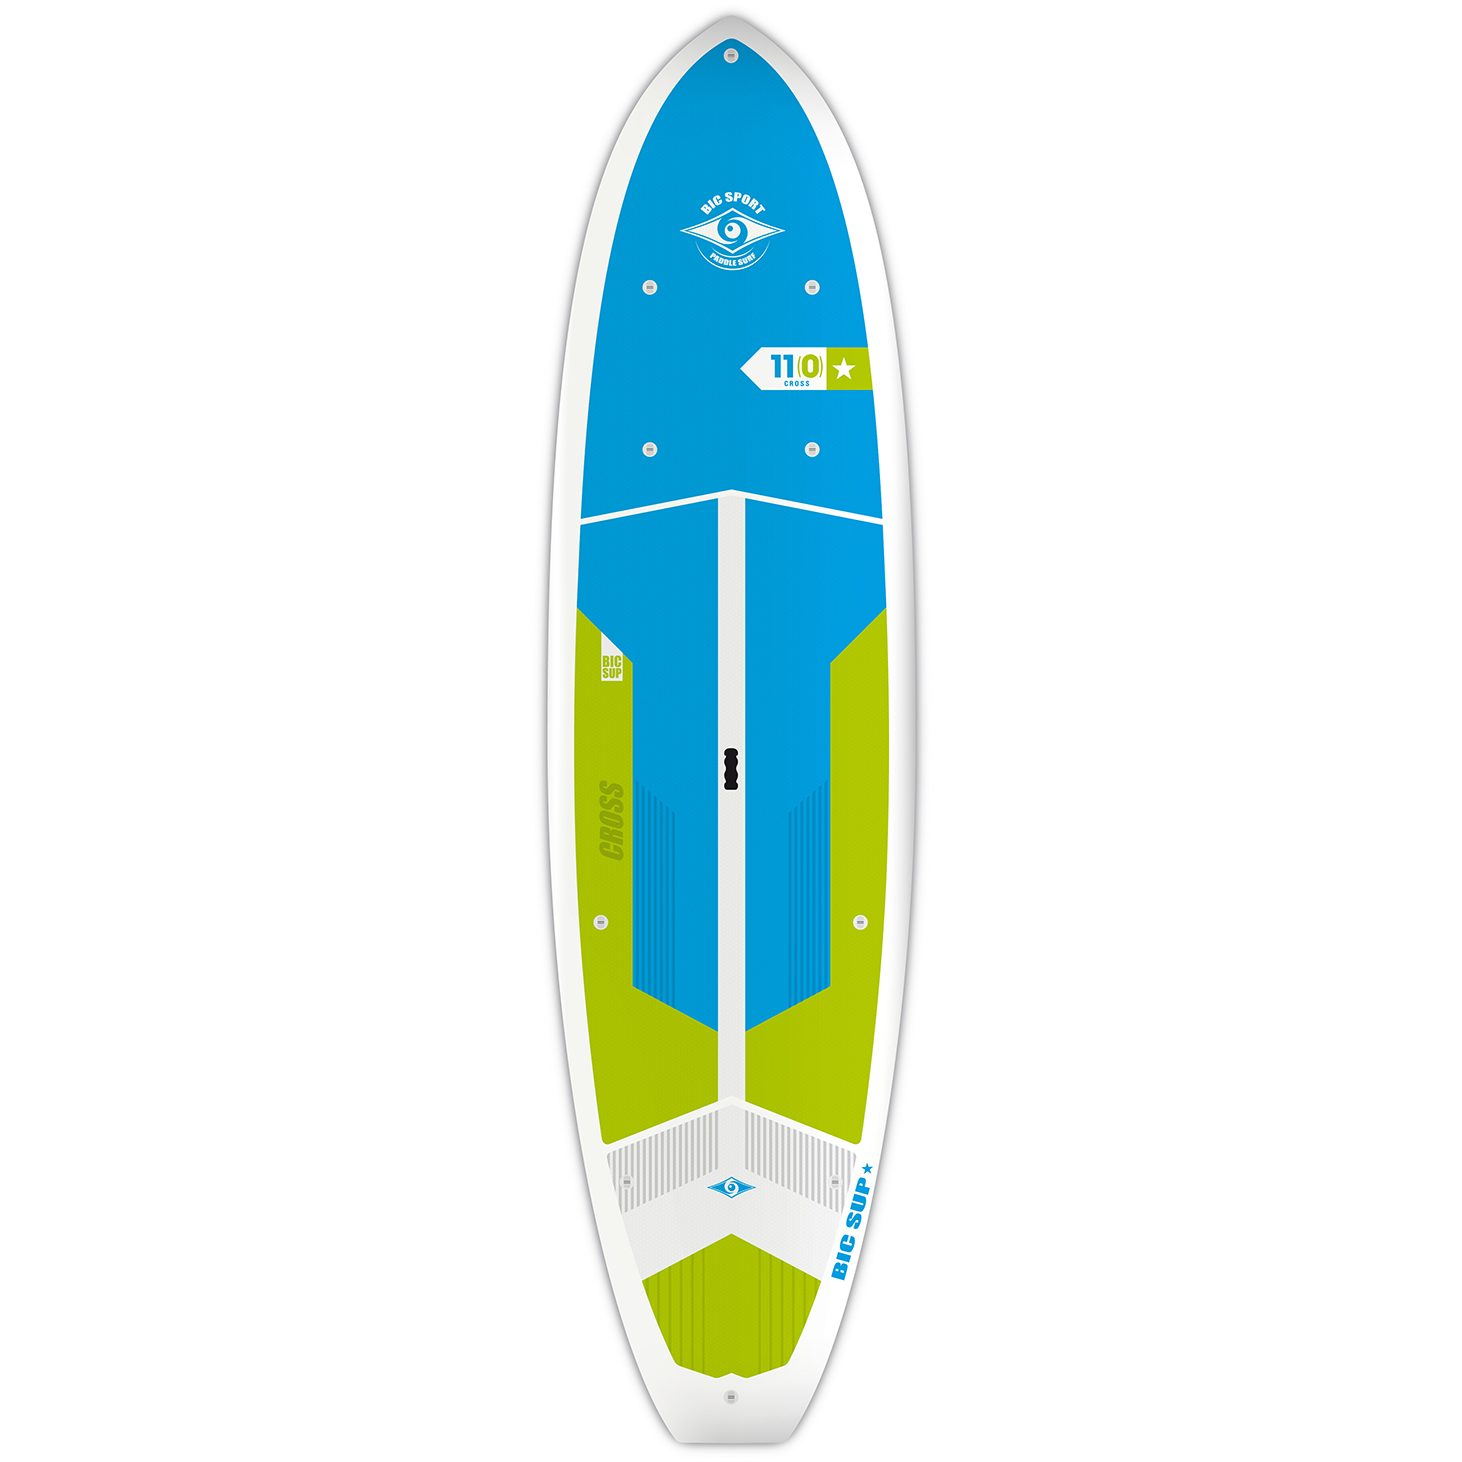 Surf vector logo - Bic Sport 